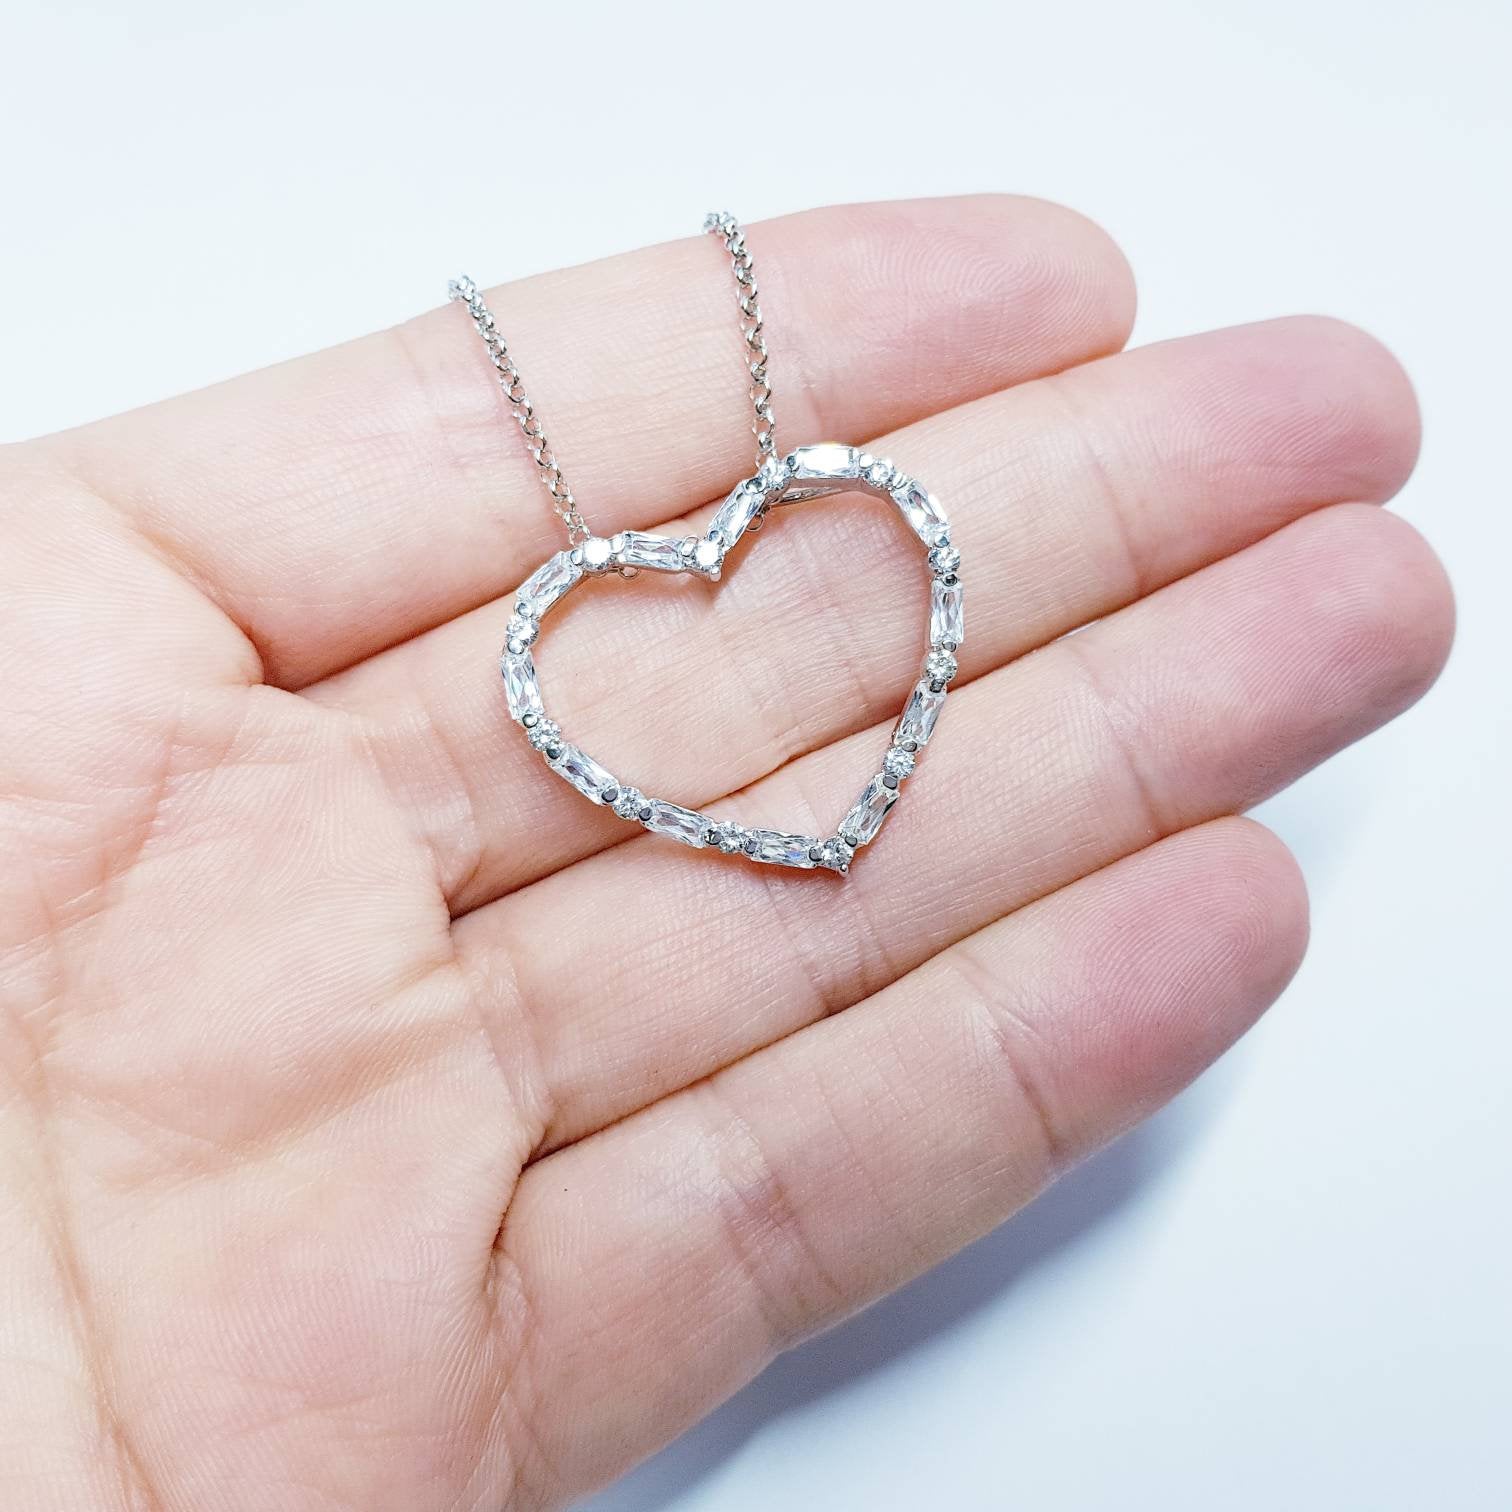 Heart necklace, Antique pendant, heart Jewelry, diamond heart necklace, jewelry gift for women